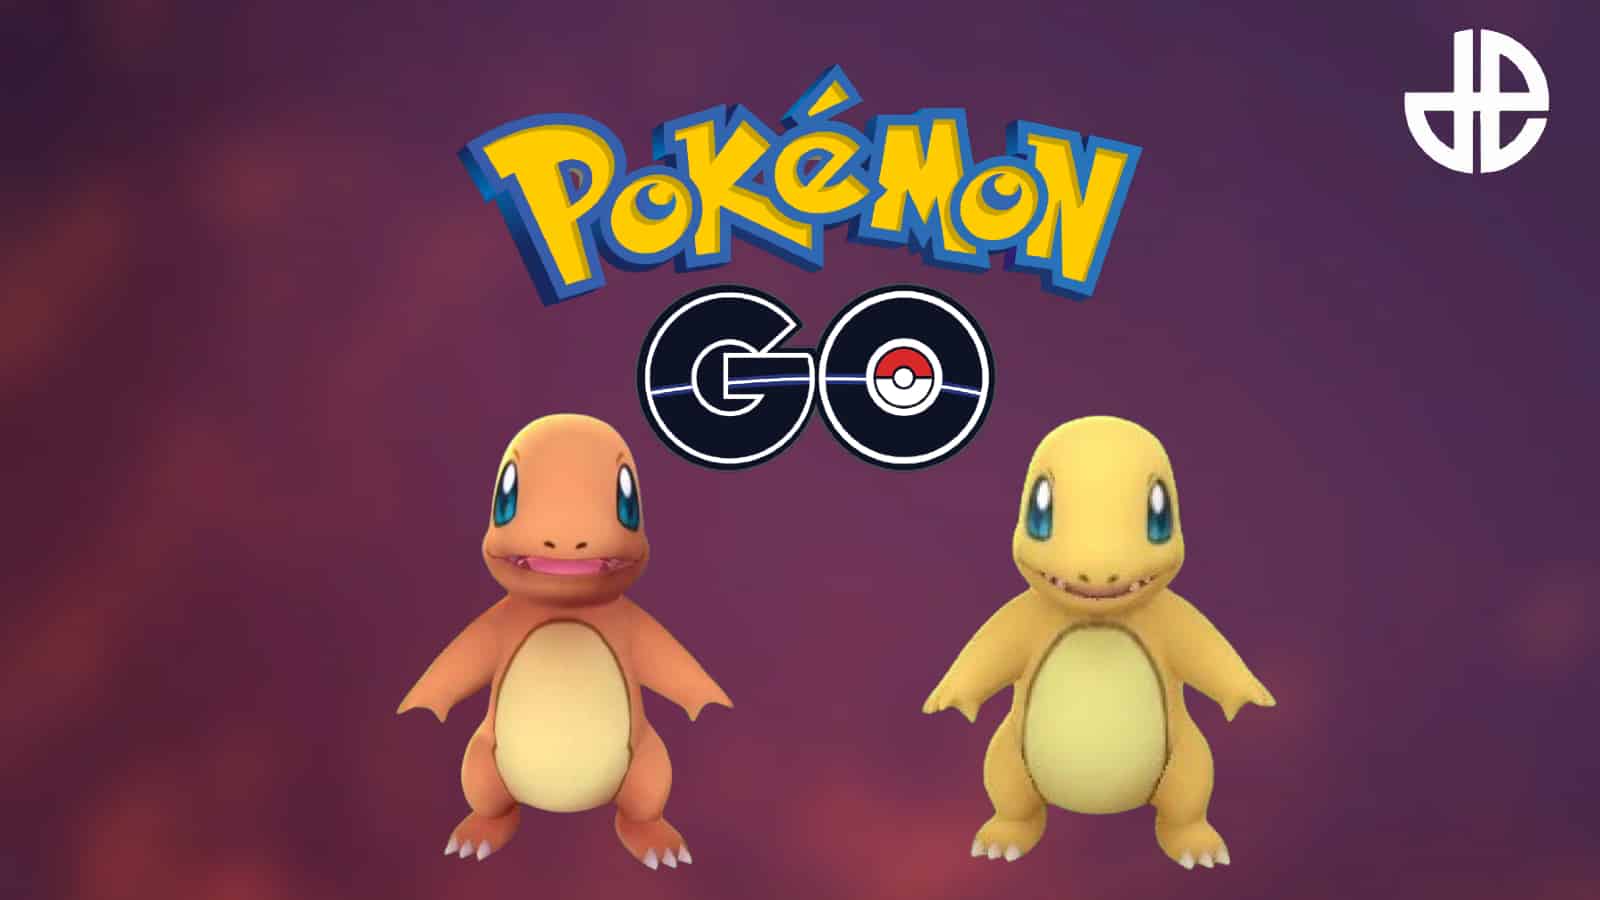 Pokémon Go Charmander attention hour on June 13